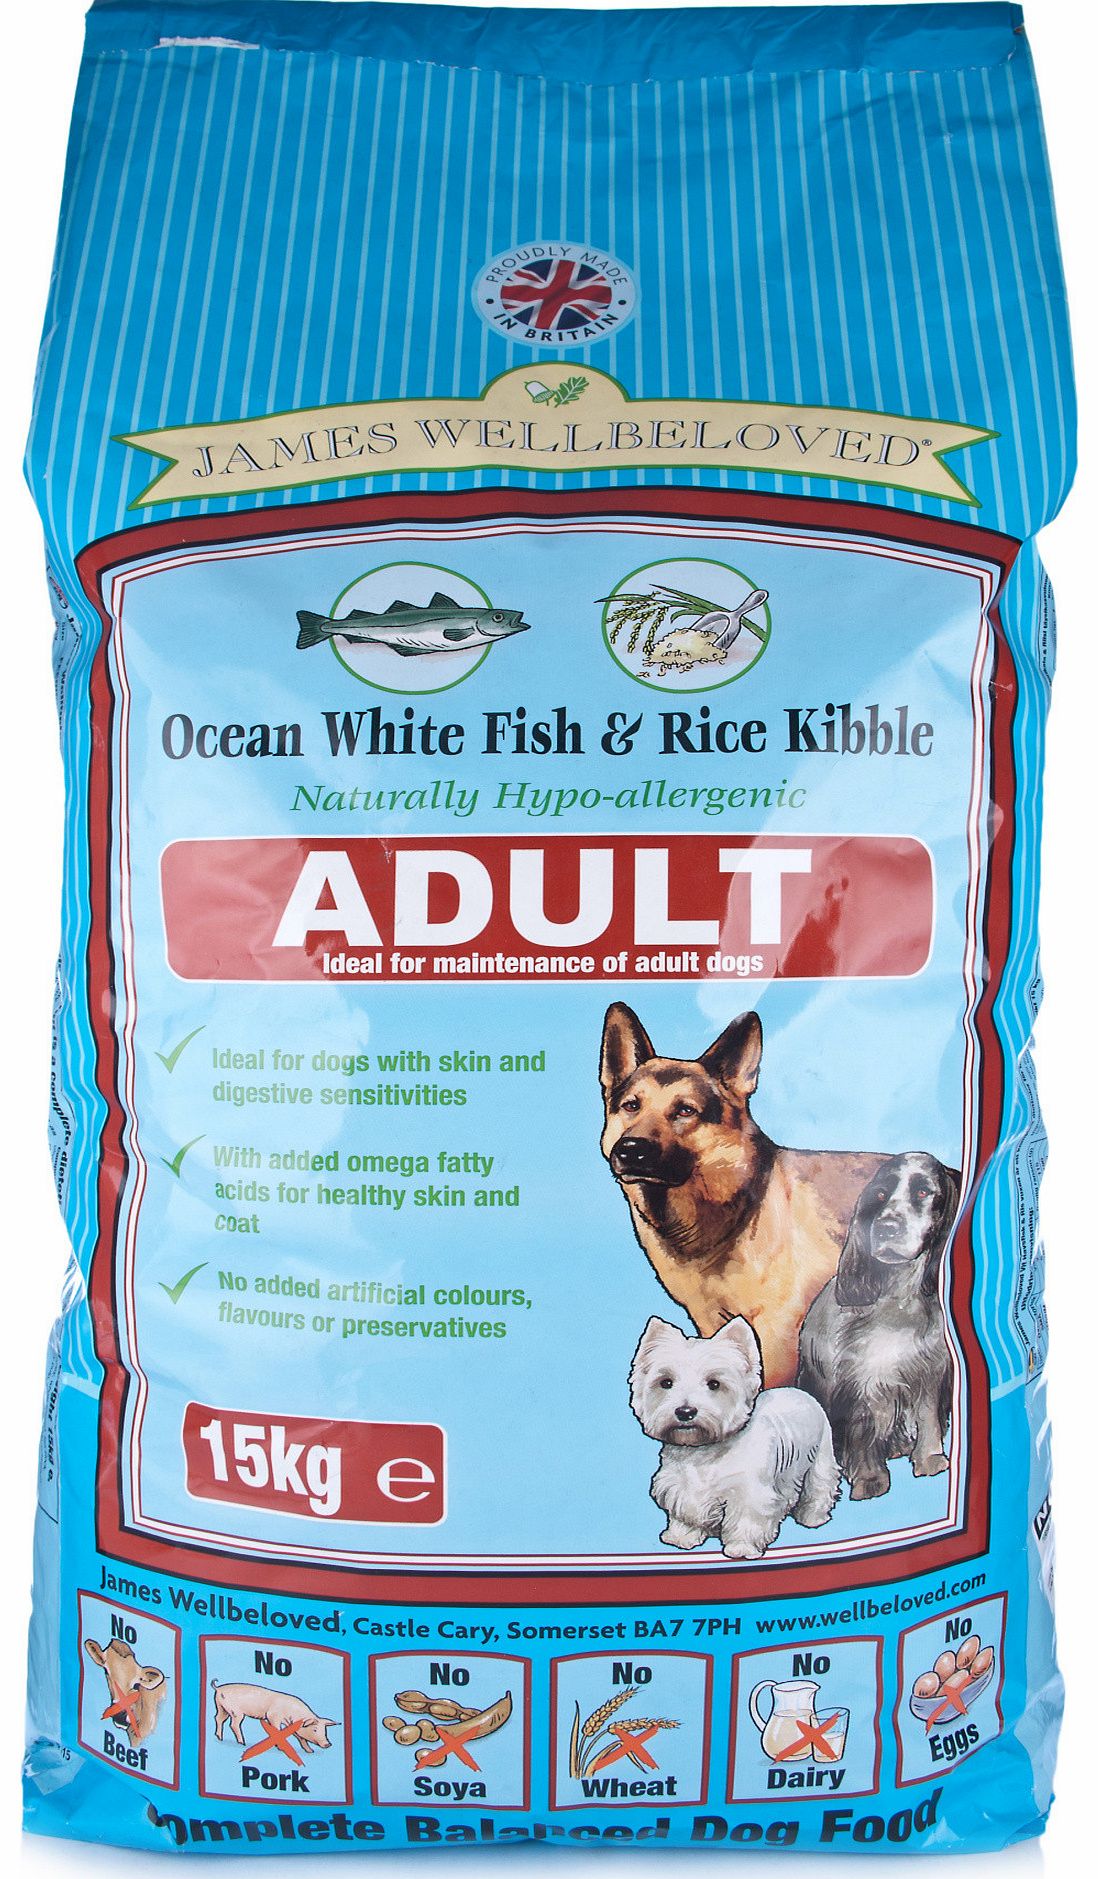 Adult Ocean White Fish & Rice